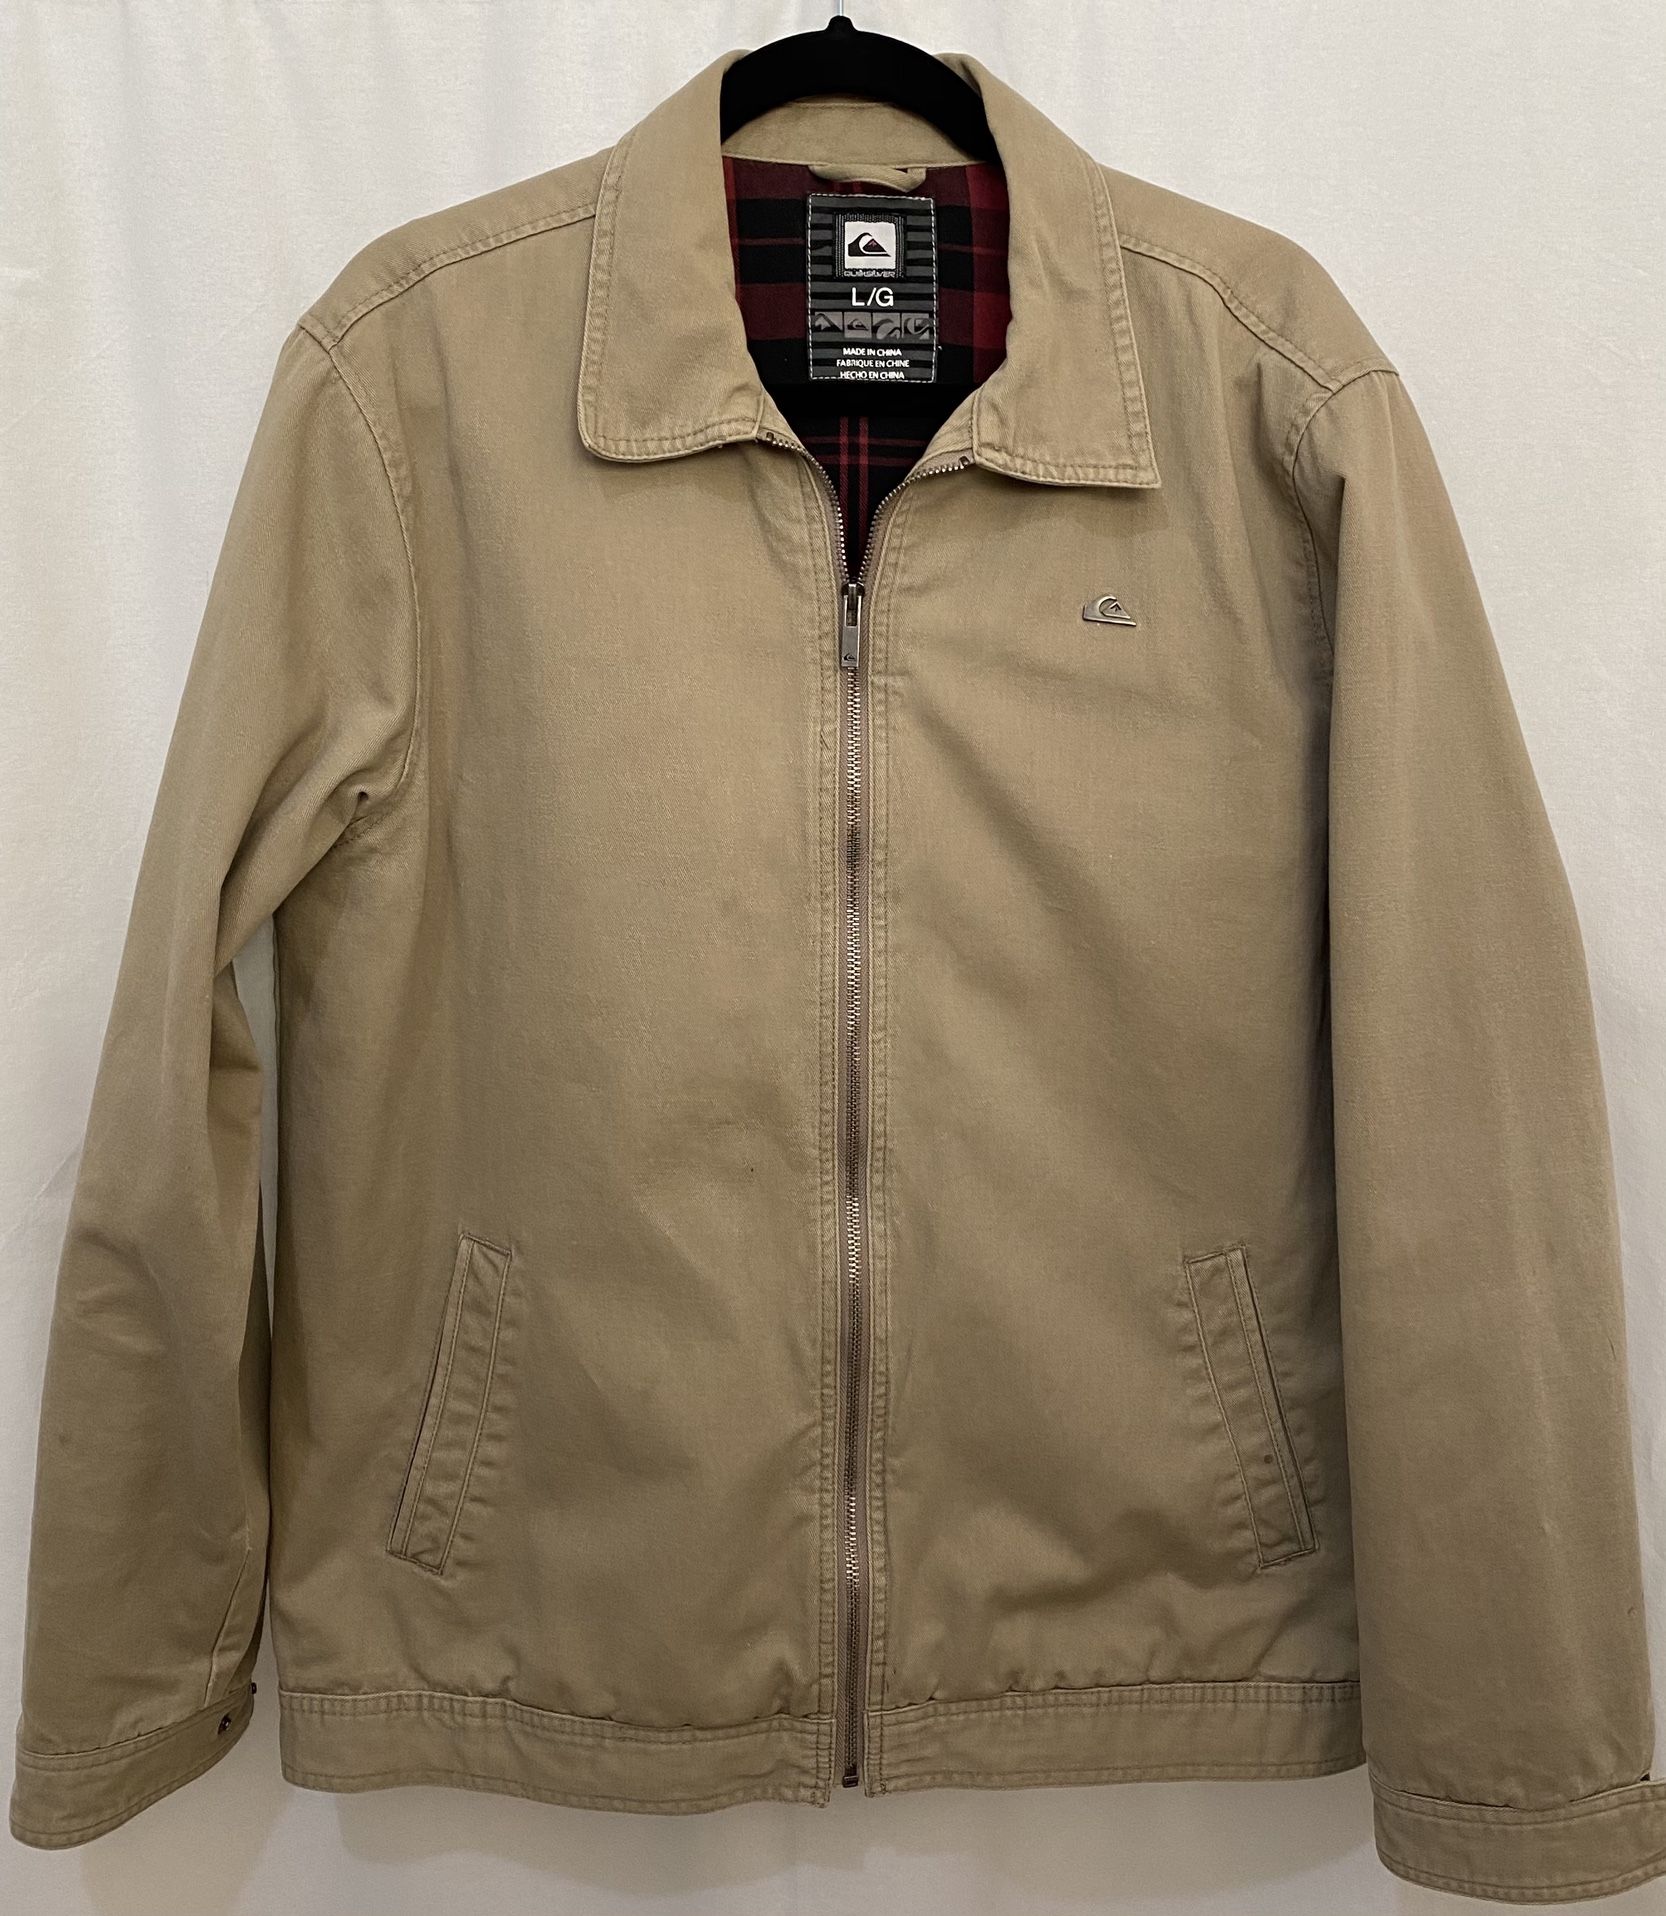 Quicksilver Jacket , Beige Or Tan, Size L